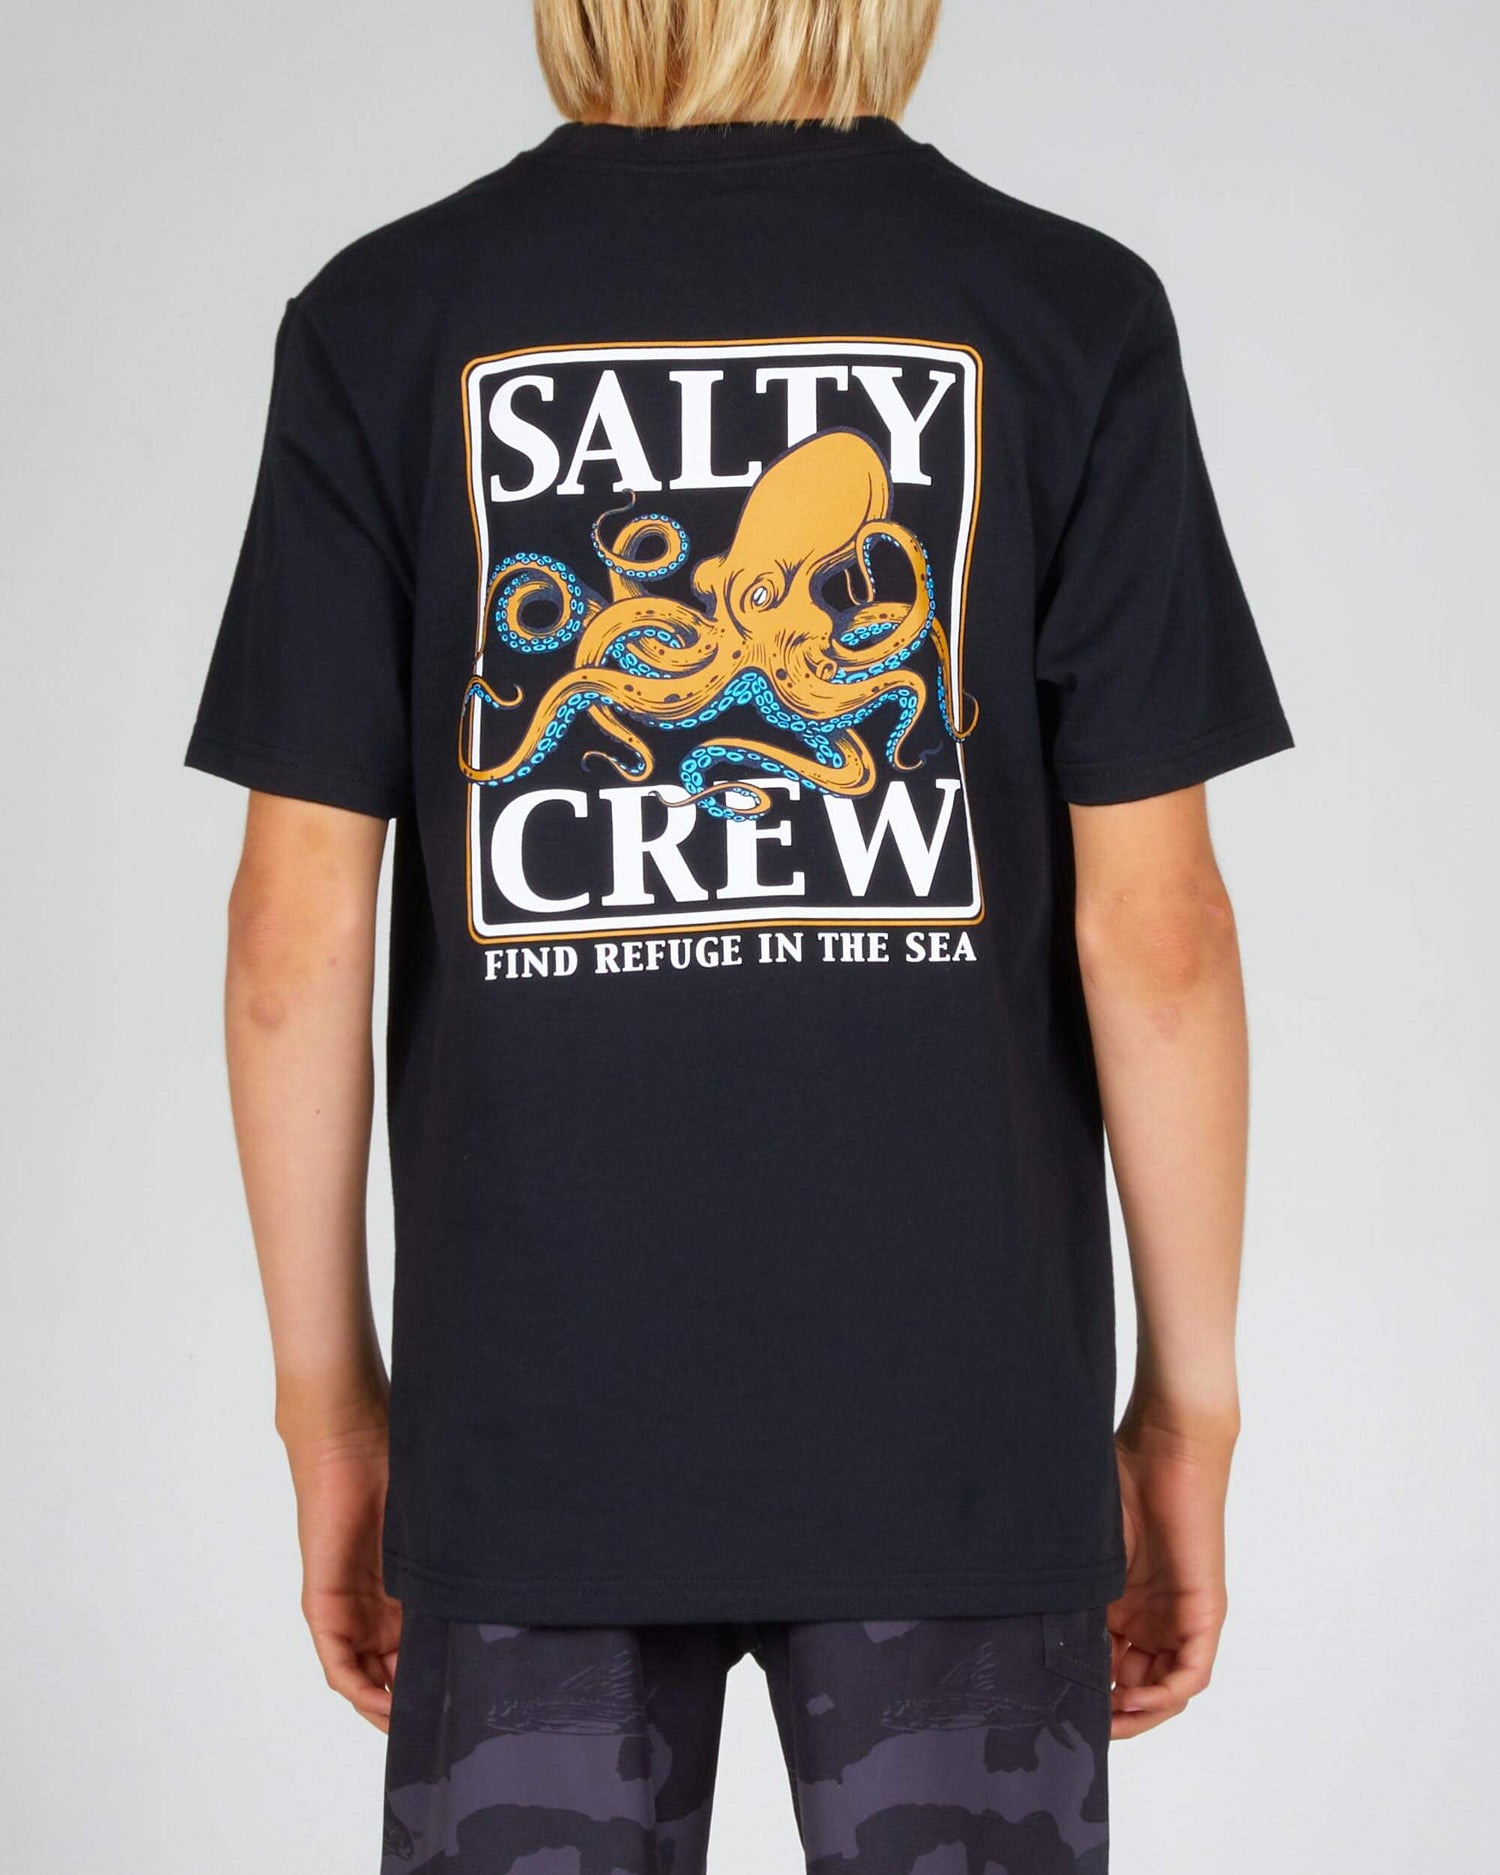 Salty Crew Boys - Tintenschleuder Boys S/S Tee - Black